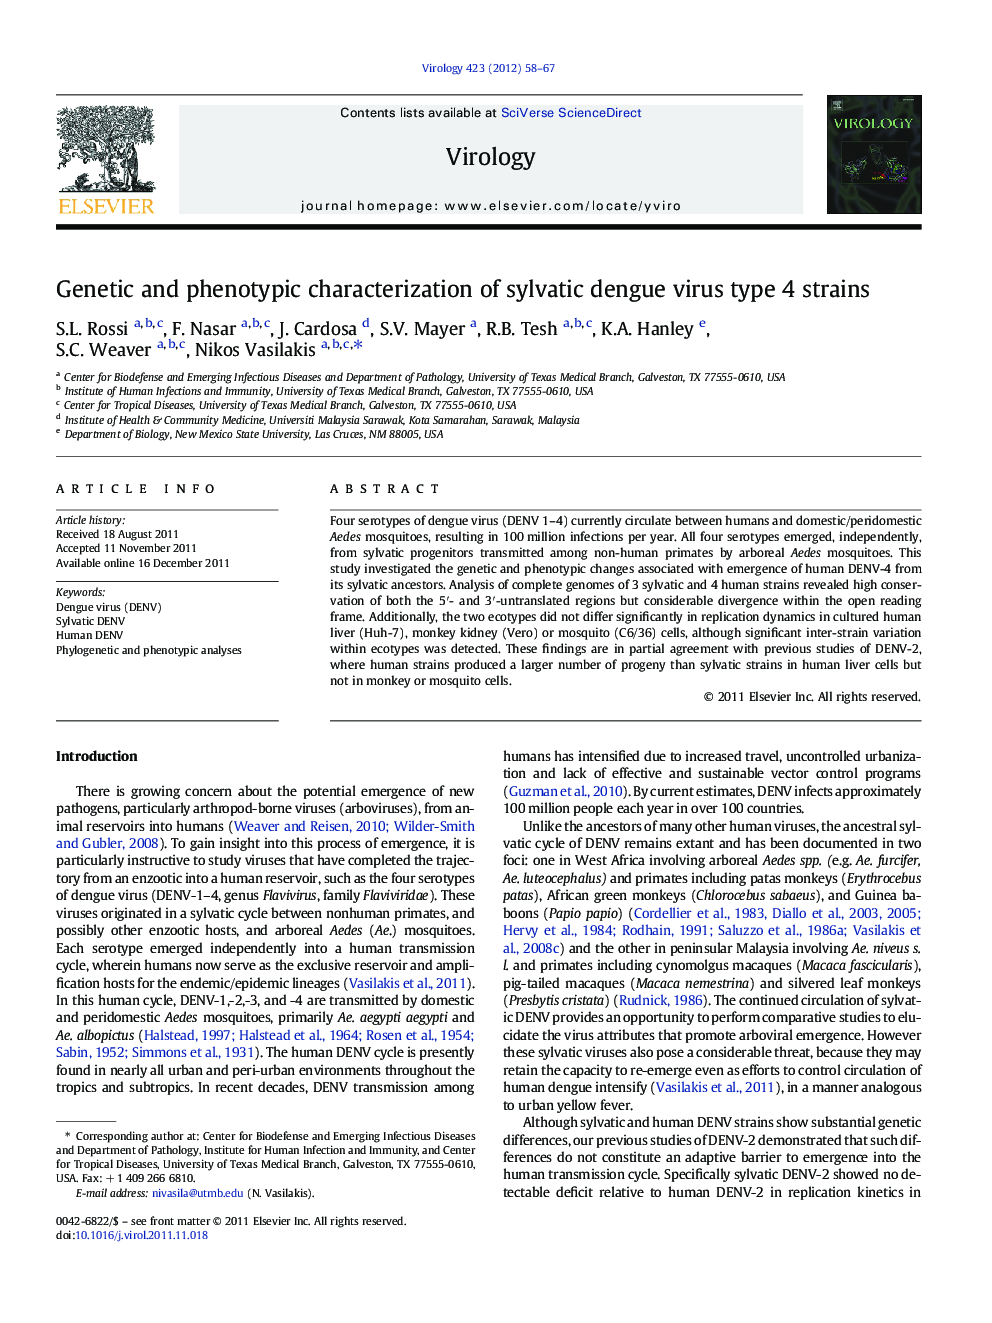 Genetic and phenotypic characterization of sylvatic dengue virus type 4 strains